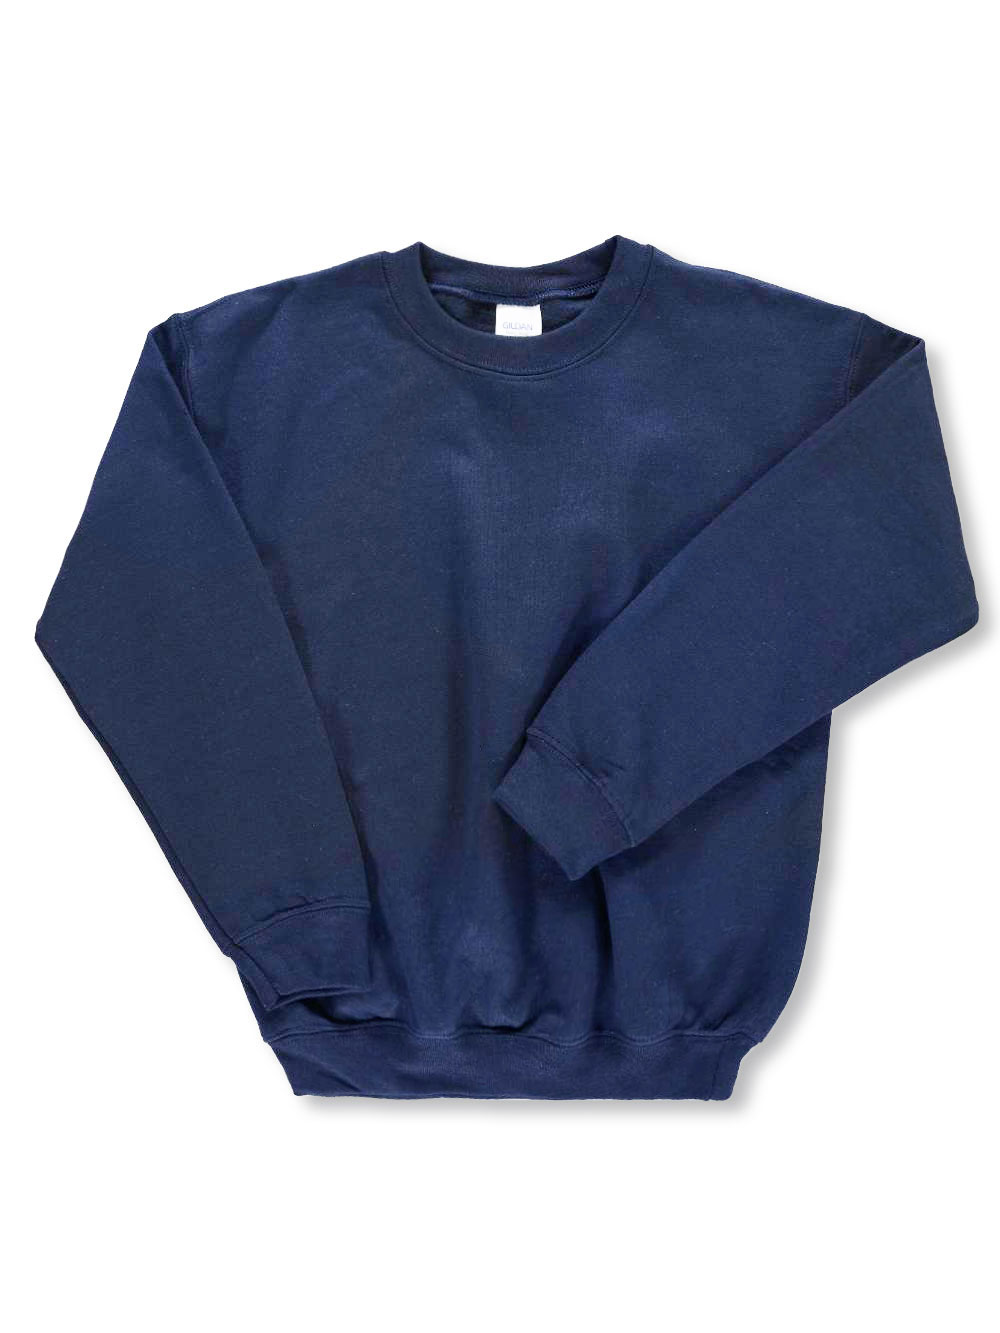 Gildan Unisex Youth Crewneck Sweatshirt (Sizes 4 - 20) | eBay